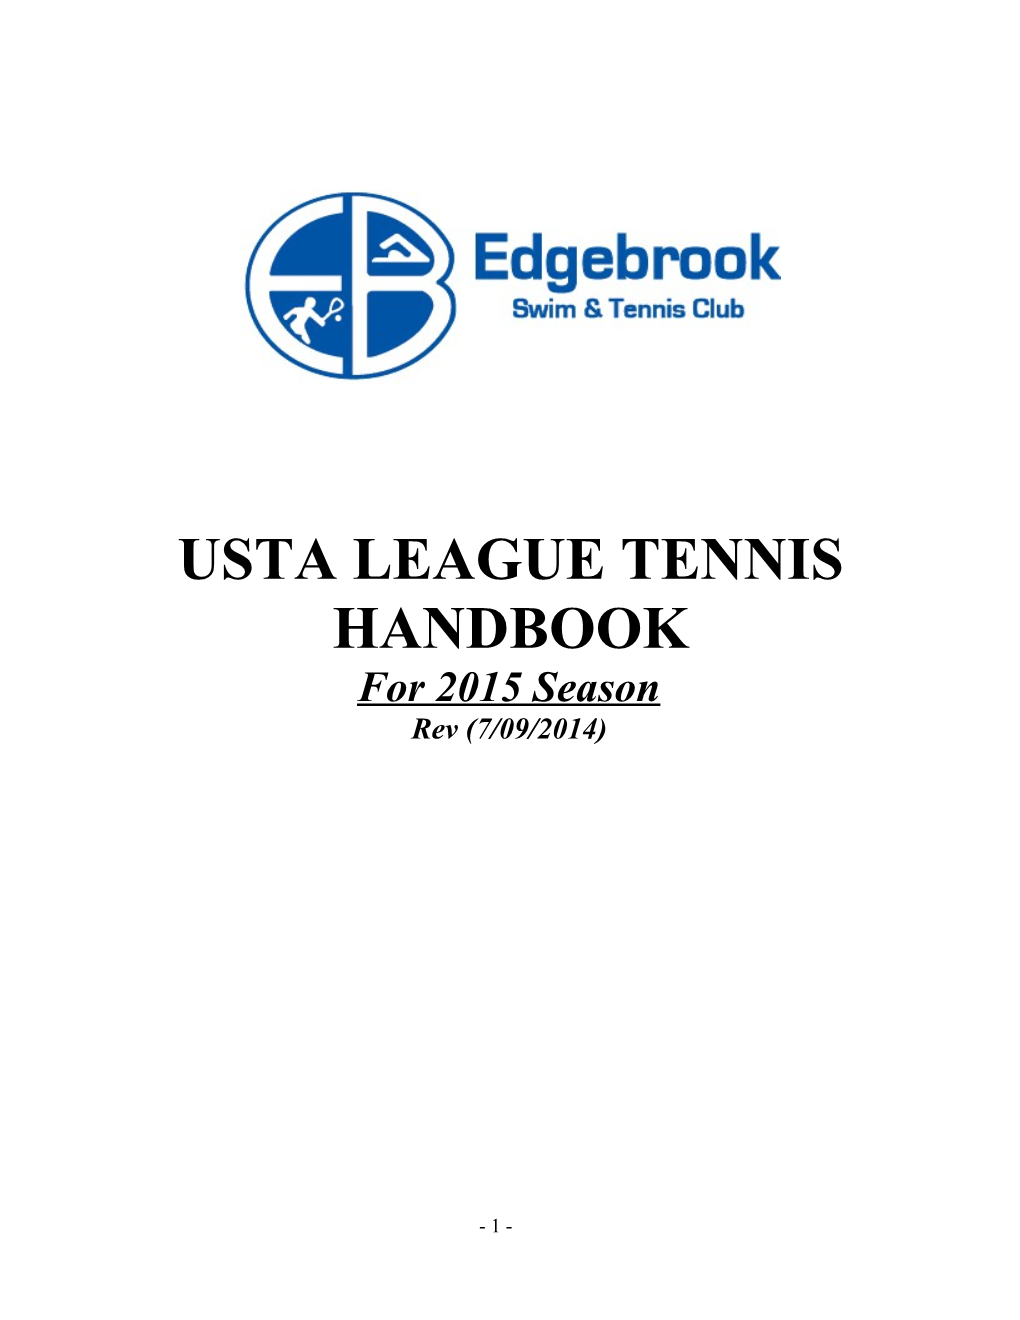 Usta League Tennis Handbook